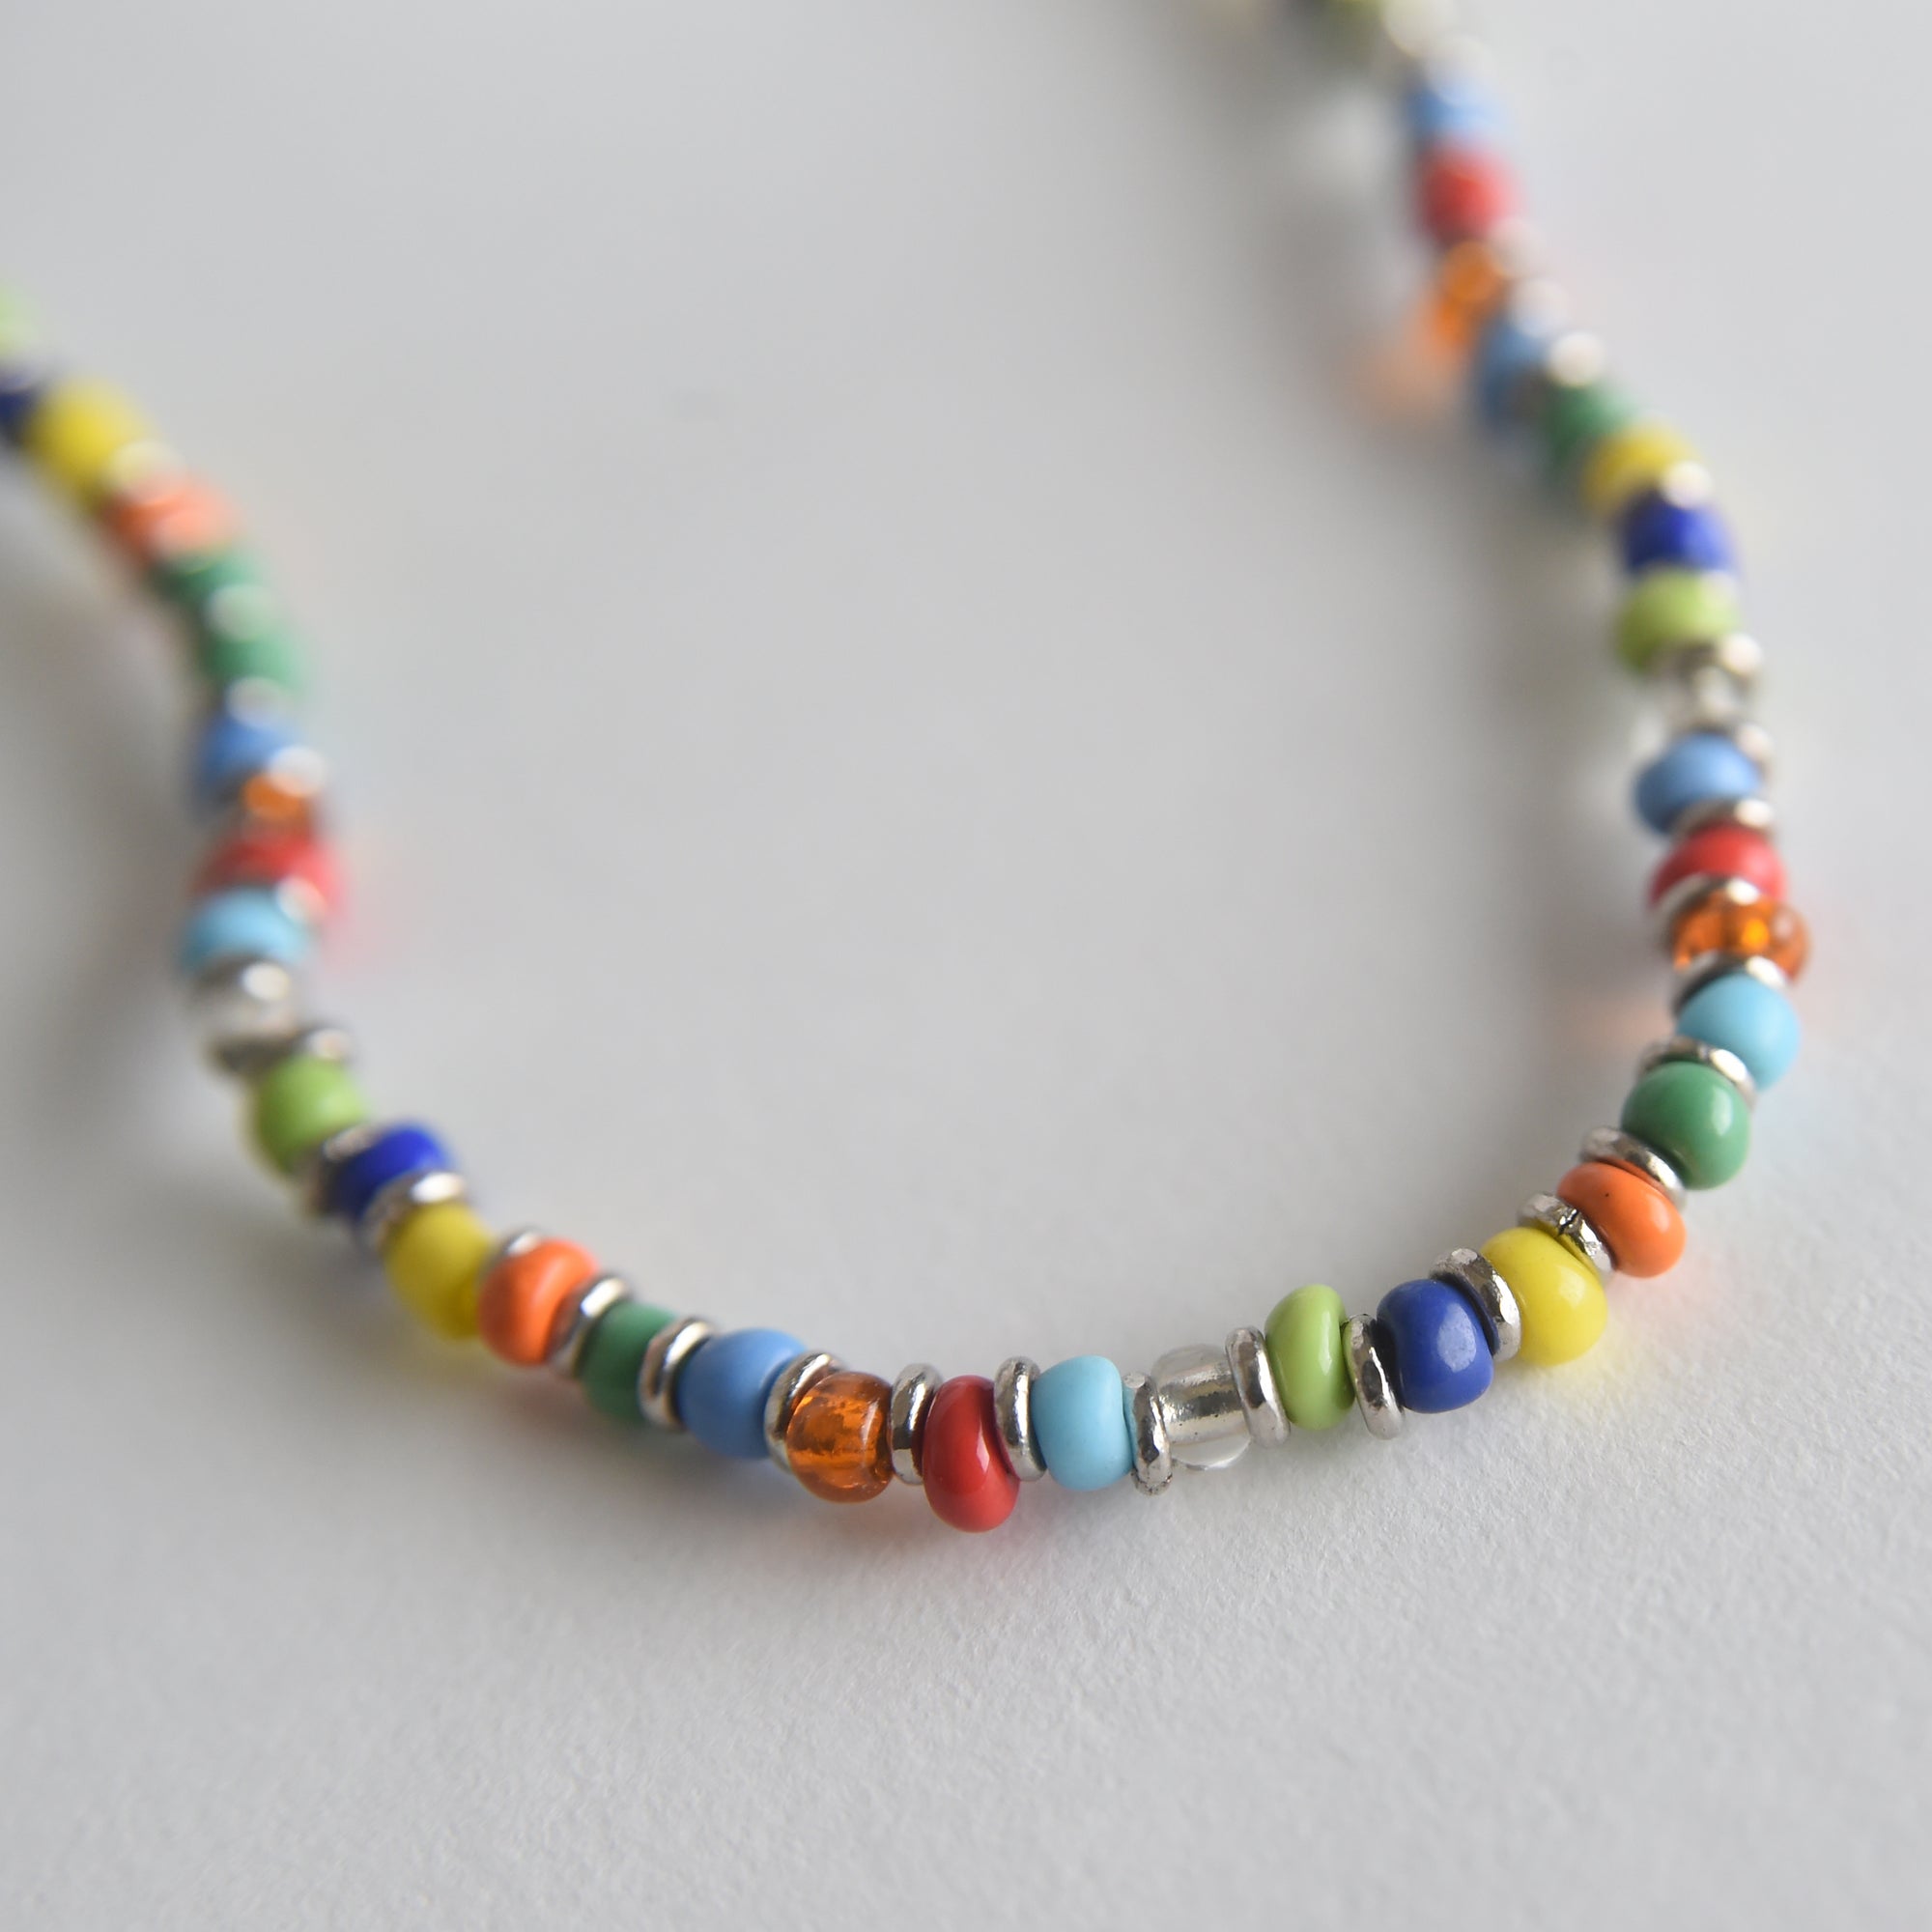 Rangi Kioo (Colored Glass) Necklace